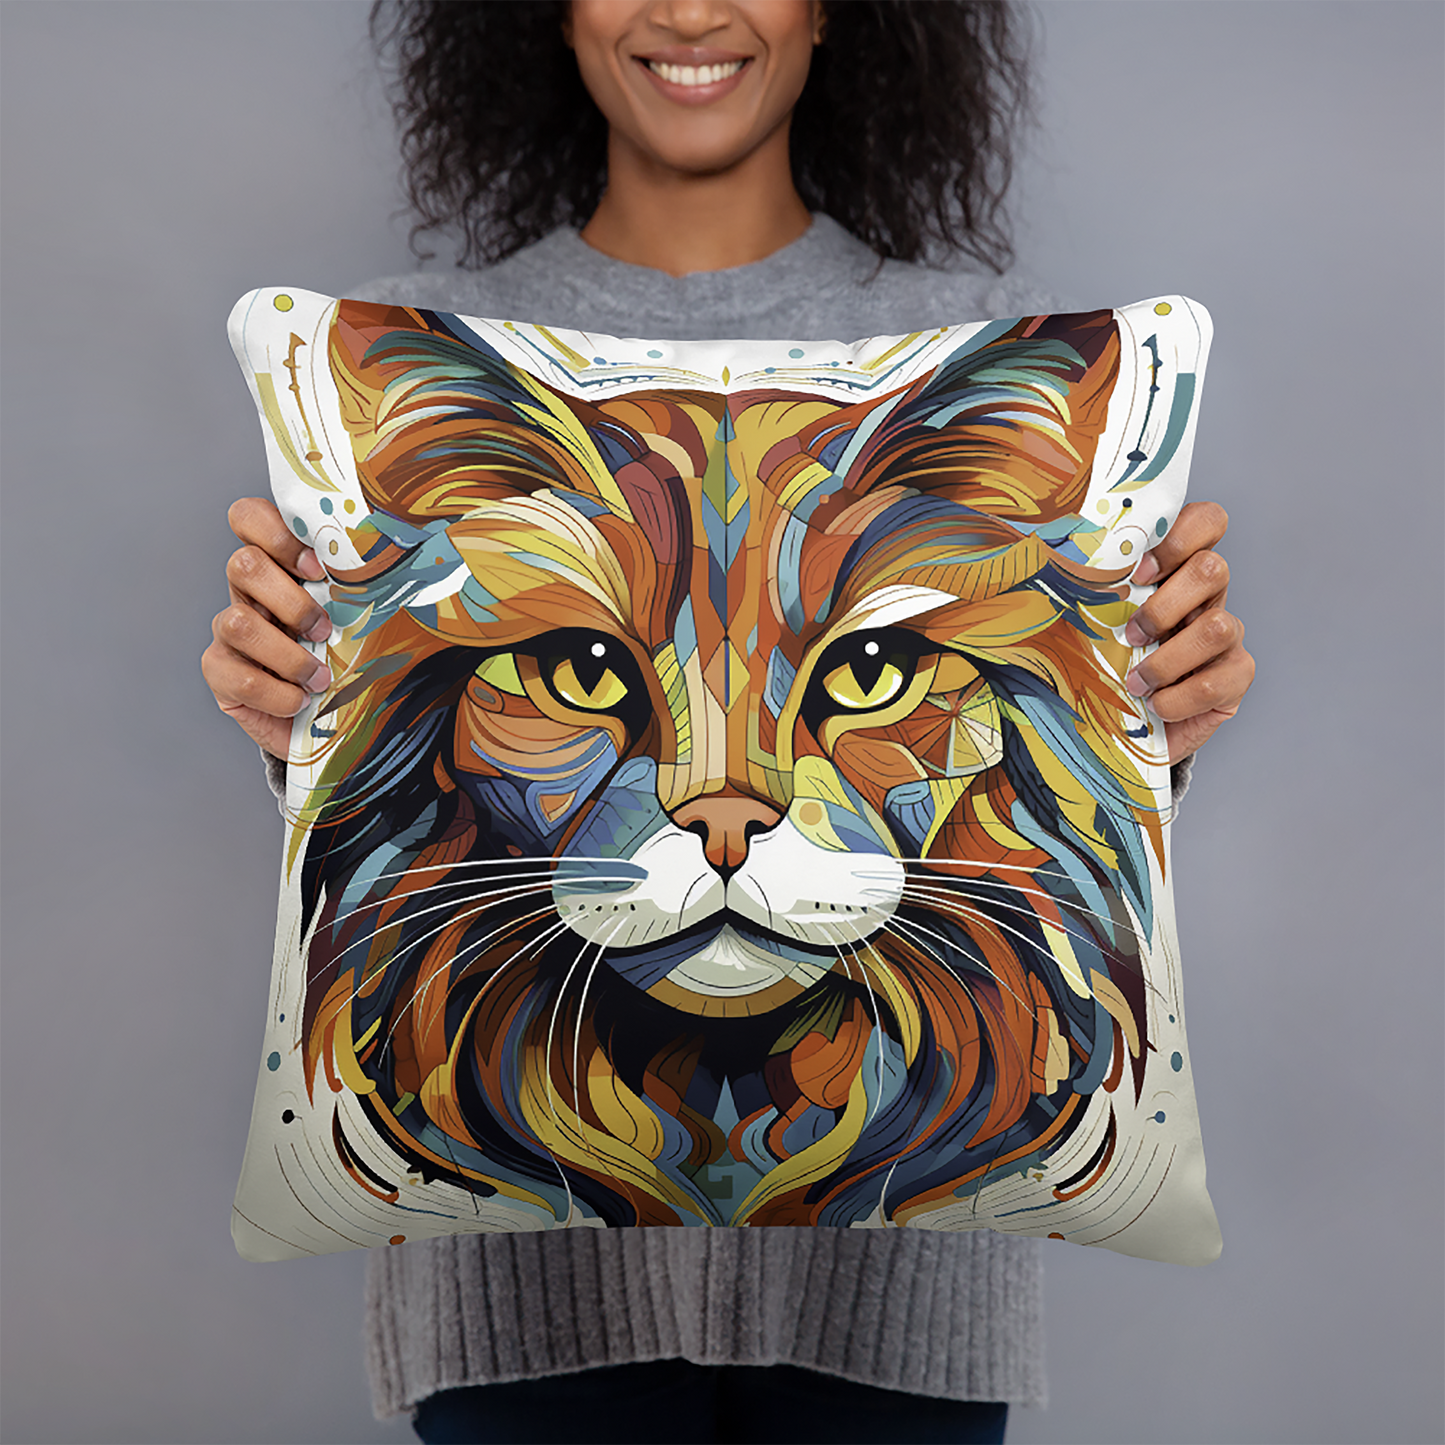 Cat Throw Pillow Vibrant Geometric Feline Detailed Portrait Polyester Decorative Cushion 18x18